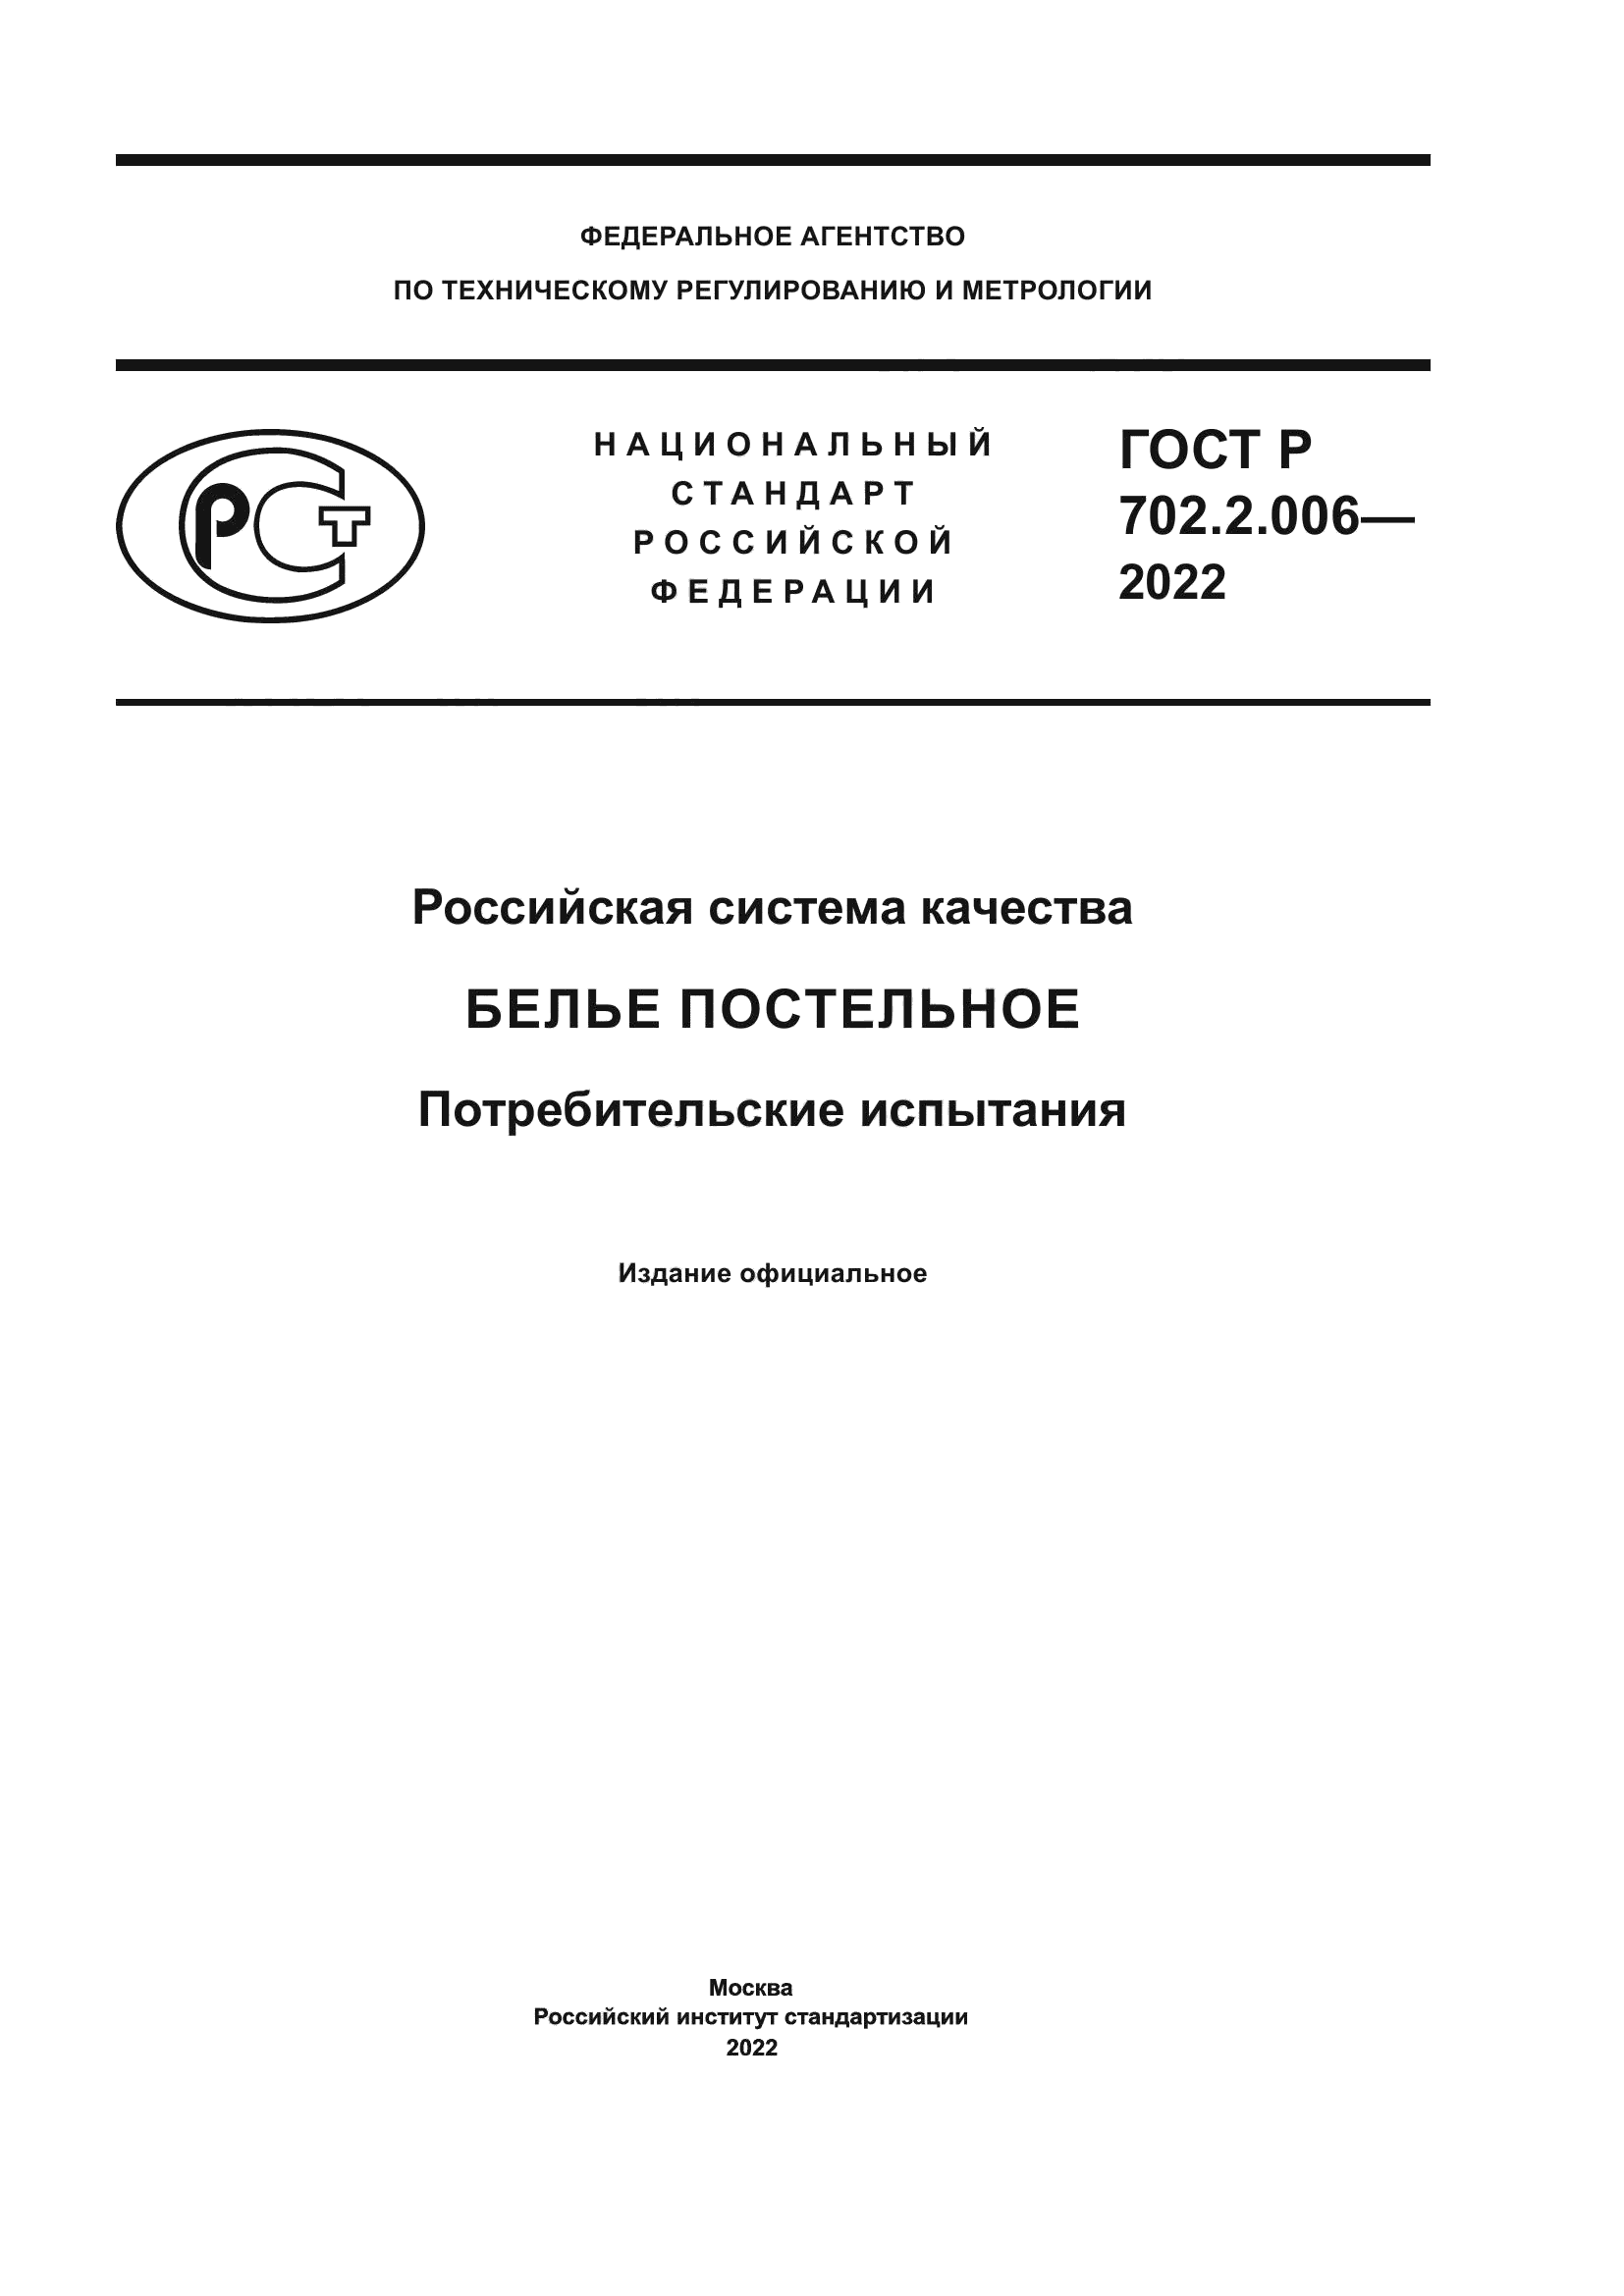 ГОСТ Р 702.2.006-2022